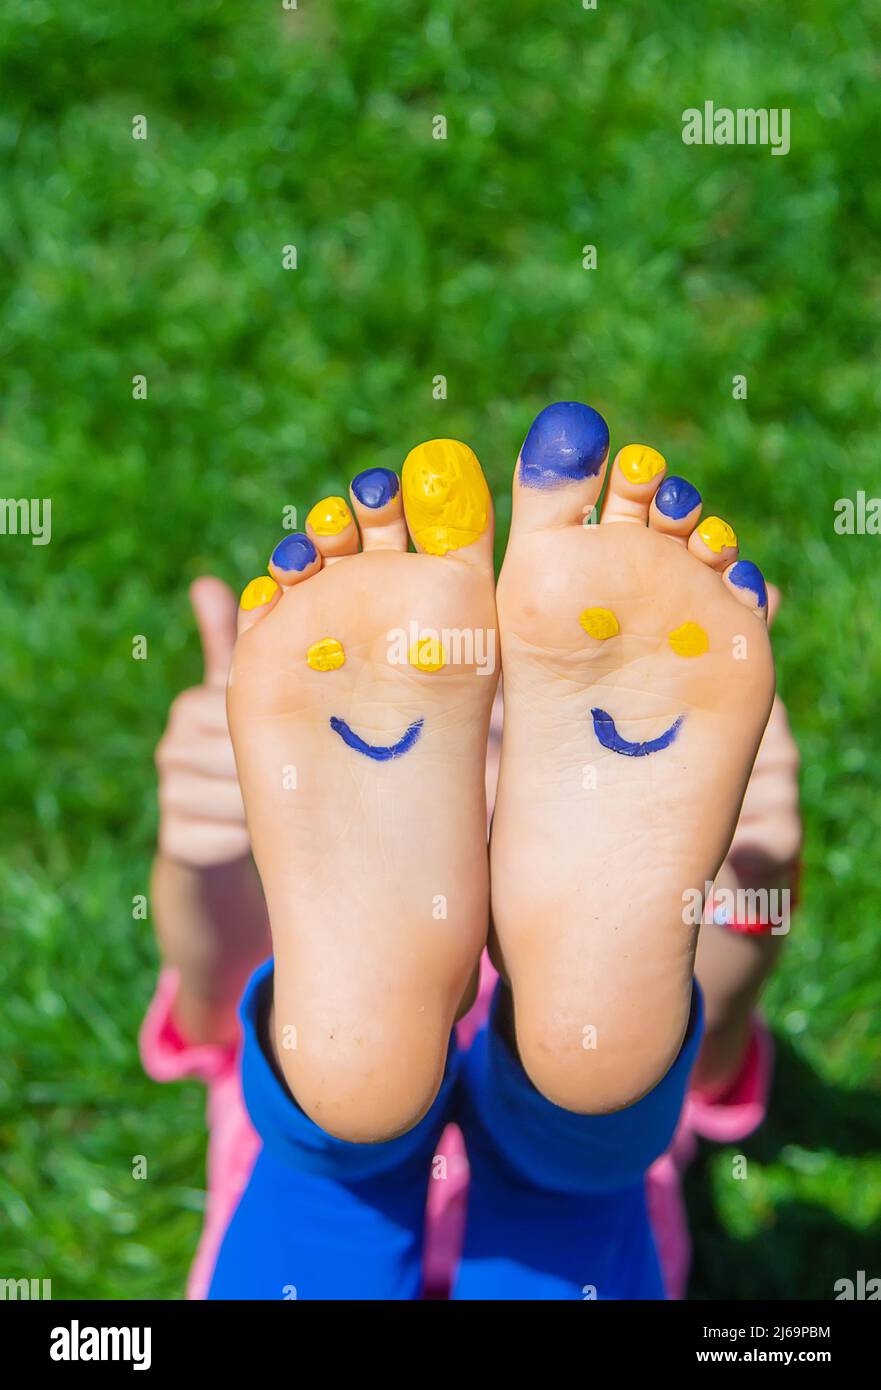 Child feet on the grass Ukrainian flag. Selective focus Stock Photo - Alamy